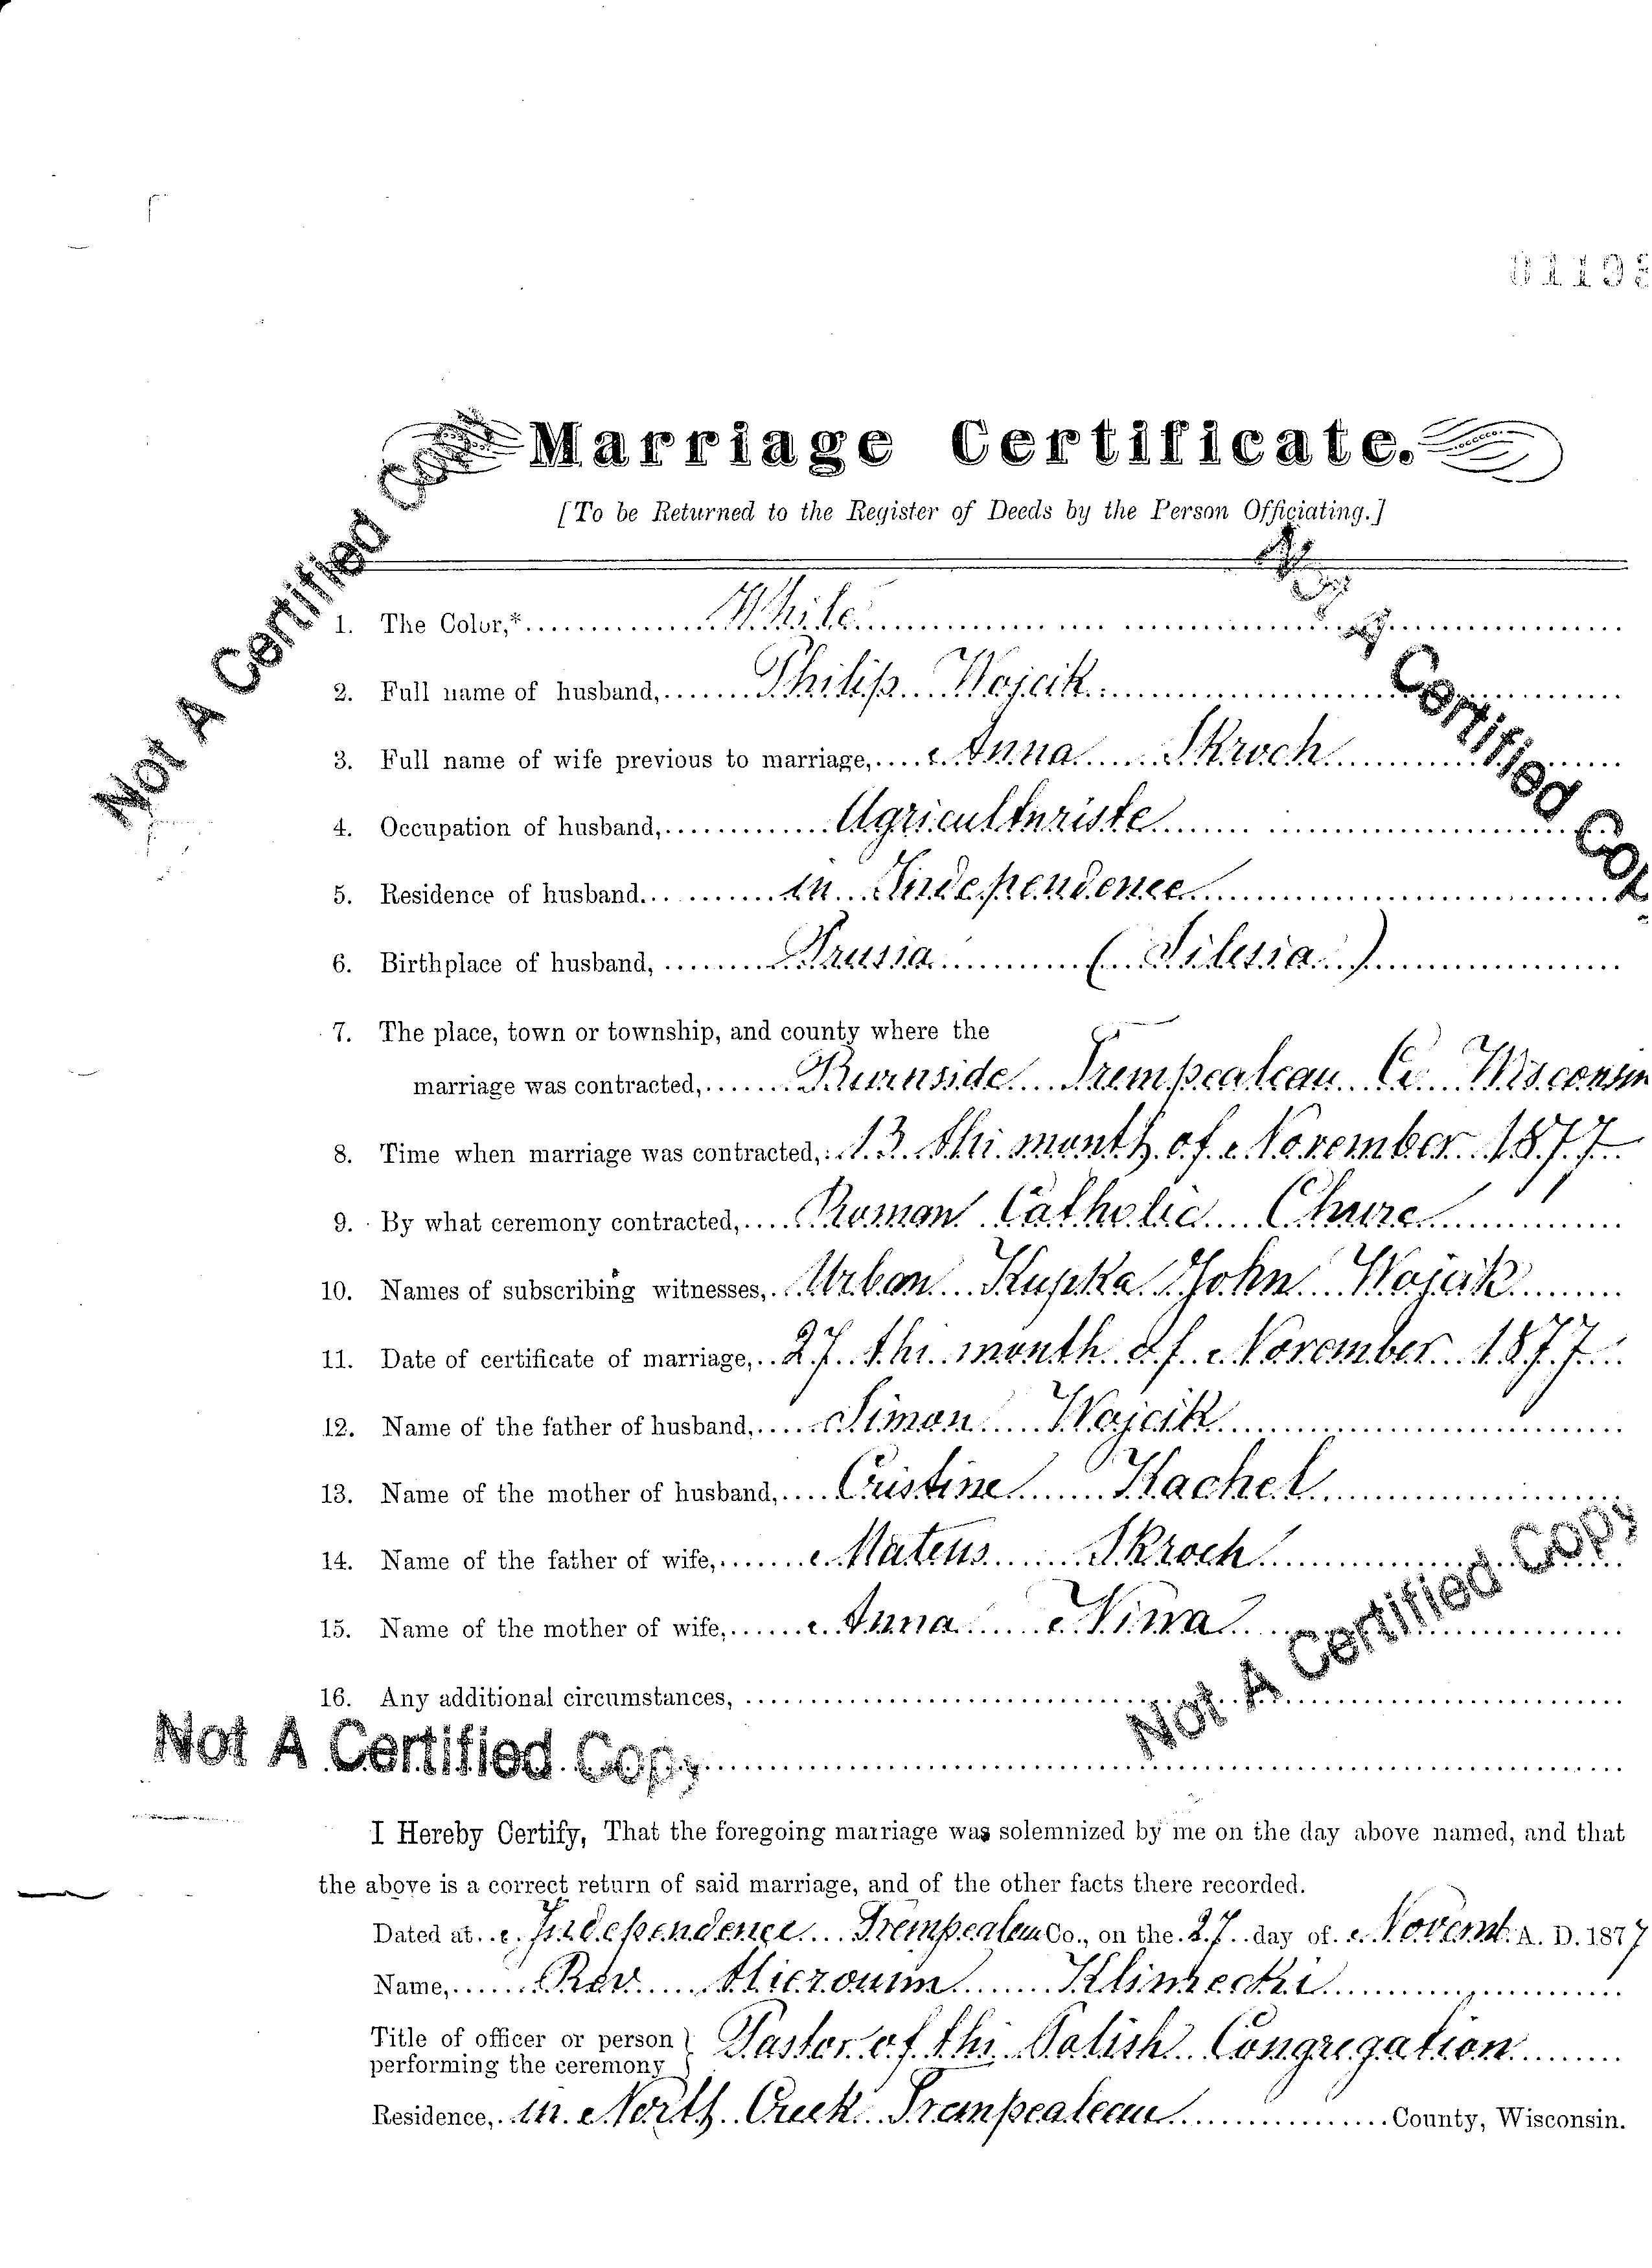 Anna Skroch and Philip Wojcik 1877 Marriage
                    Certificate